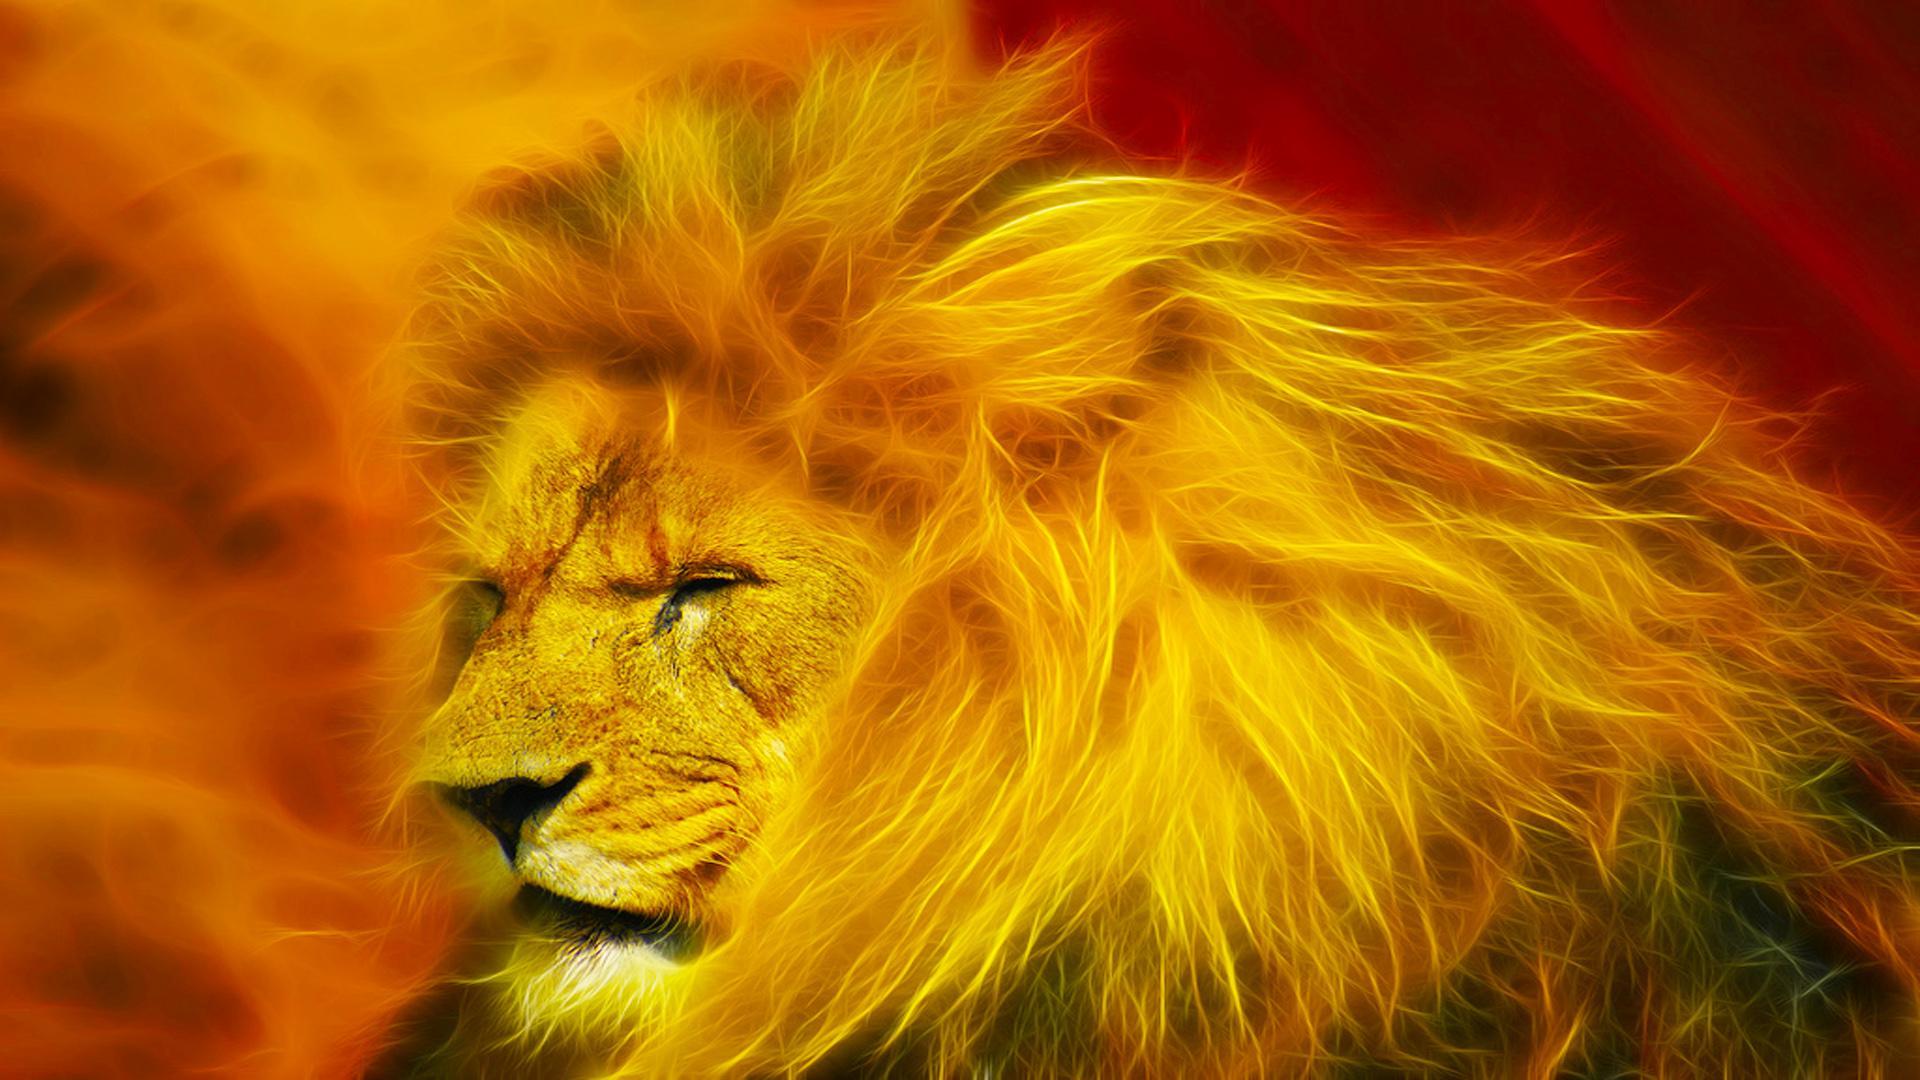 Lion King - Full Screen Lion Photos Hd - HD Wallpaper 